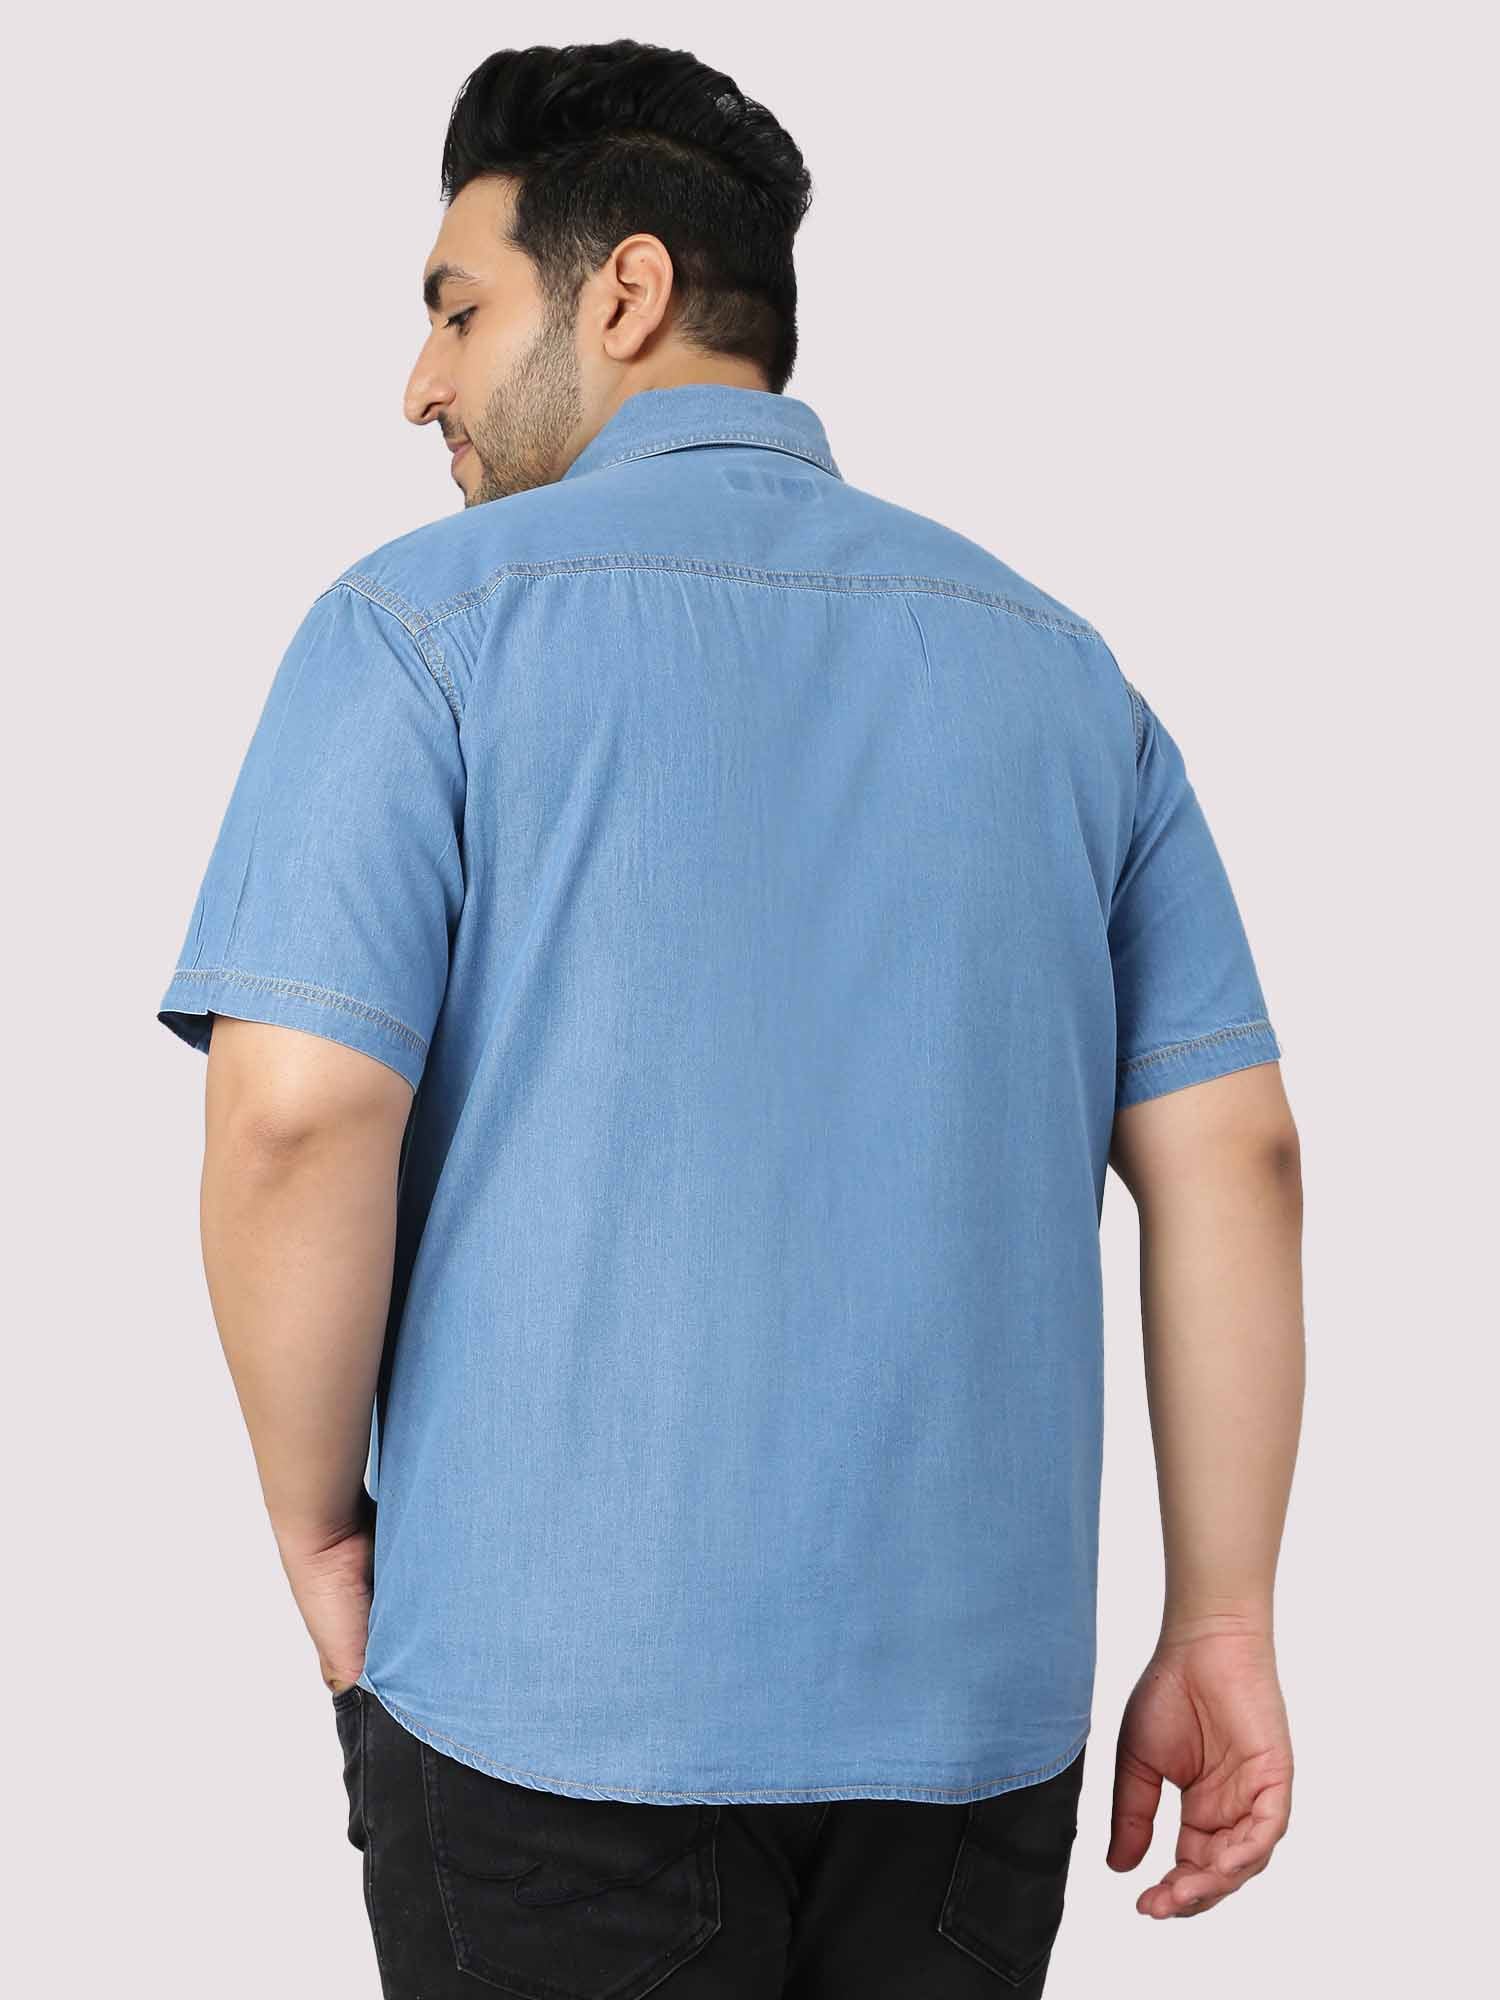 Blue Denim Single Pocket Half Sleeve Shirt Men's Plus Size